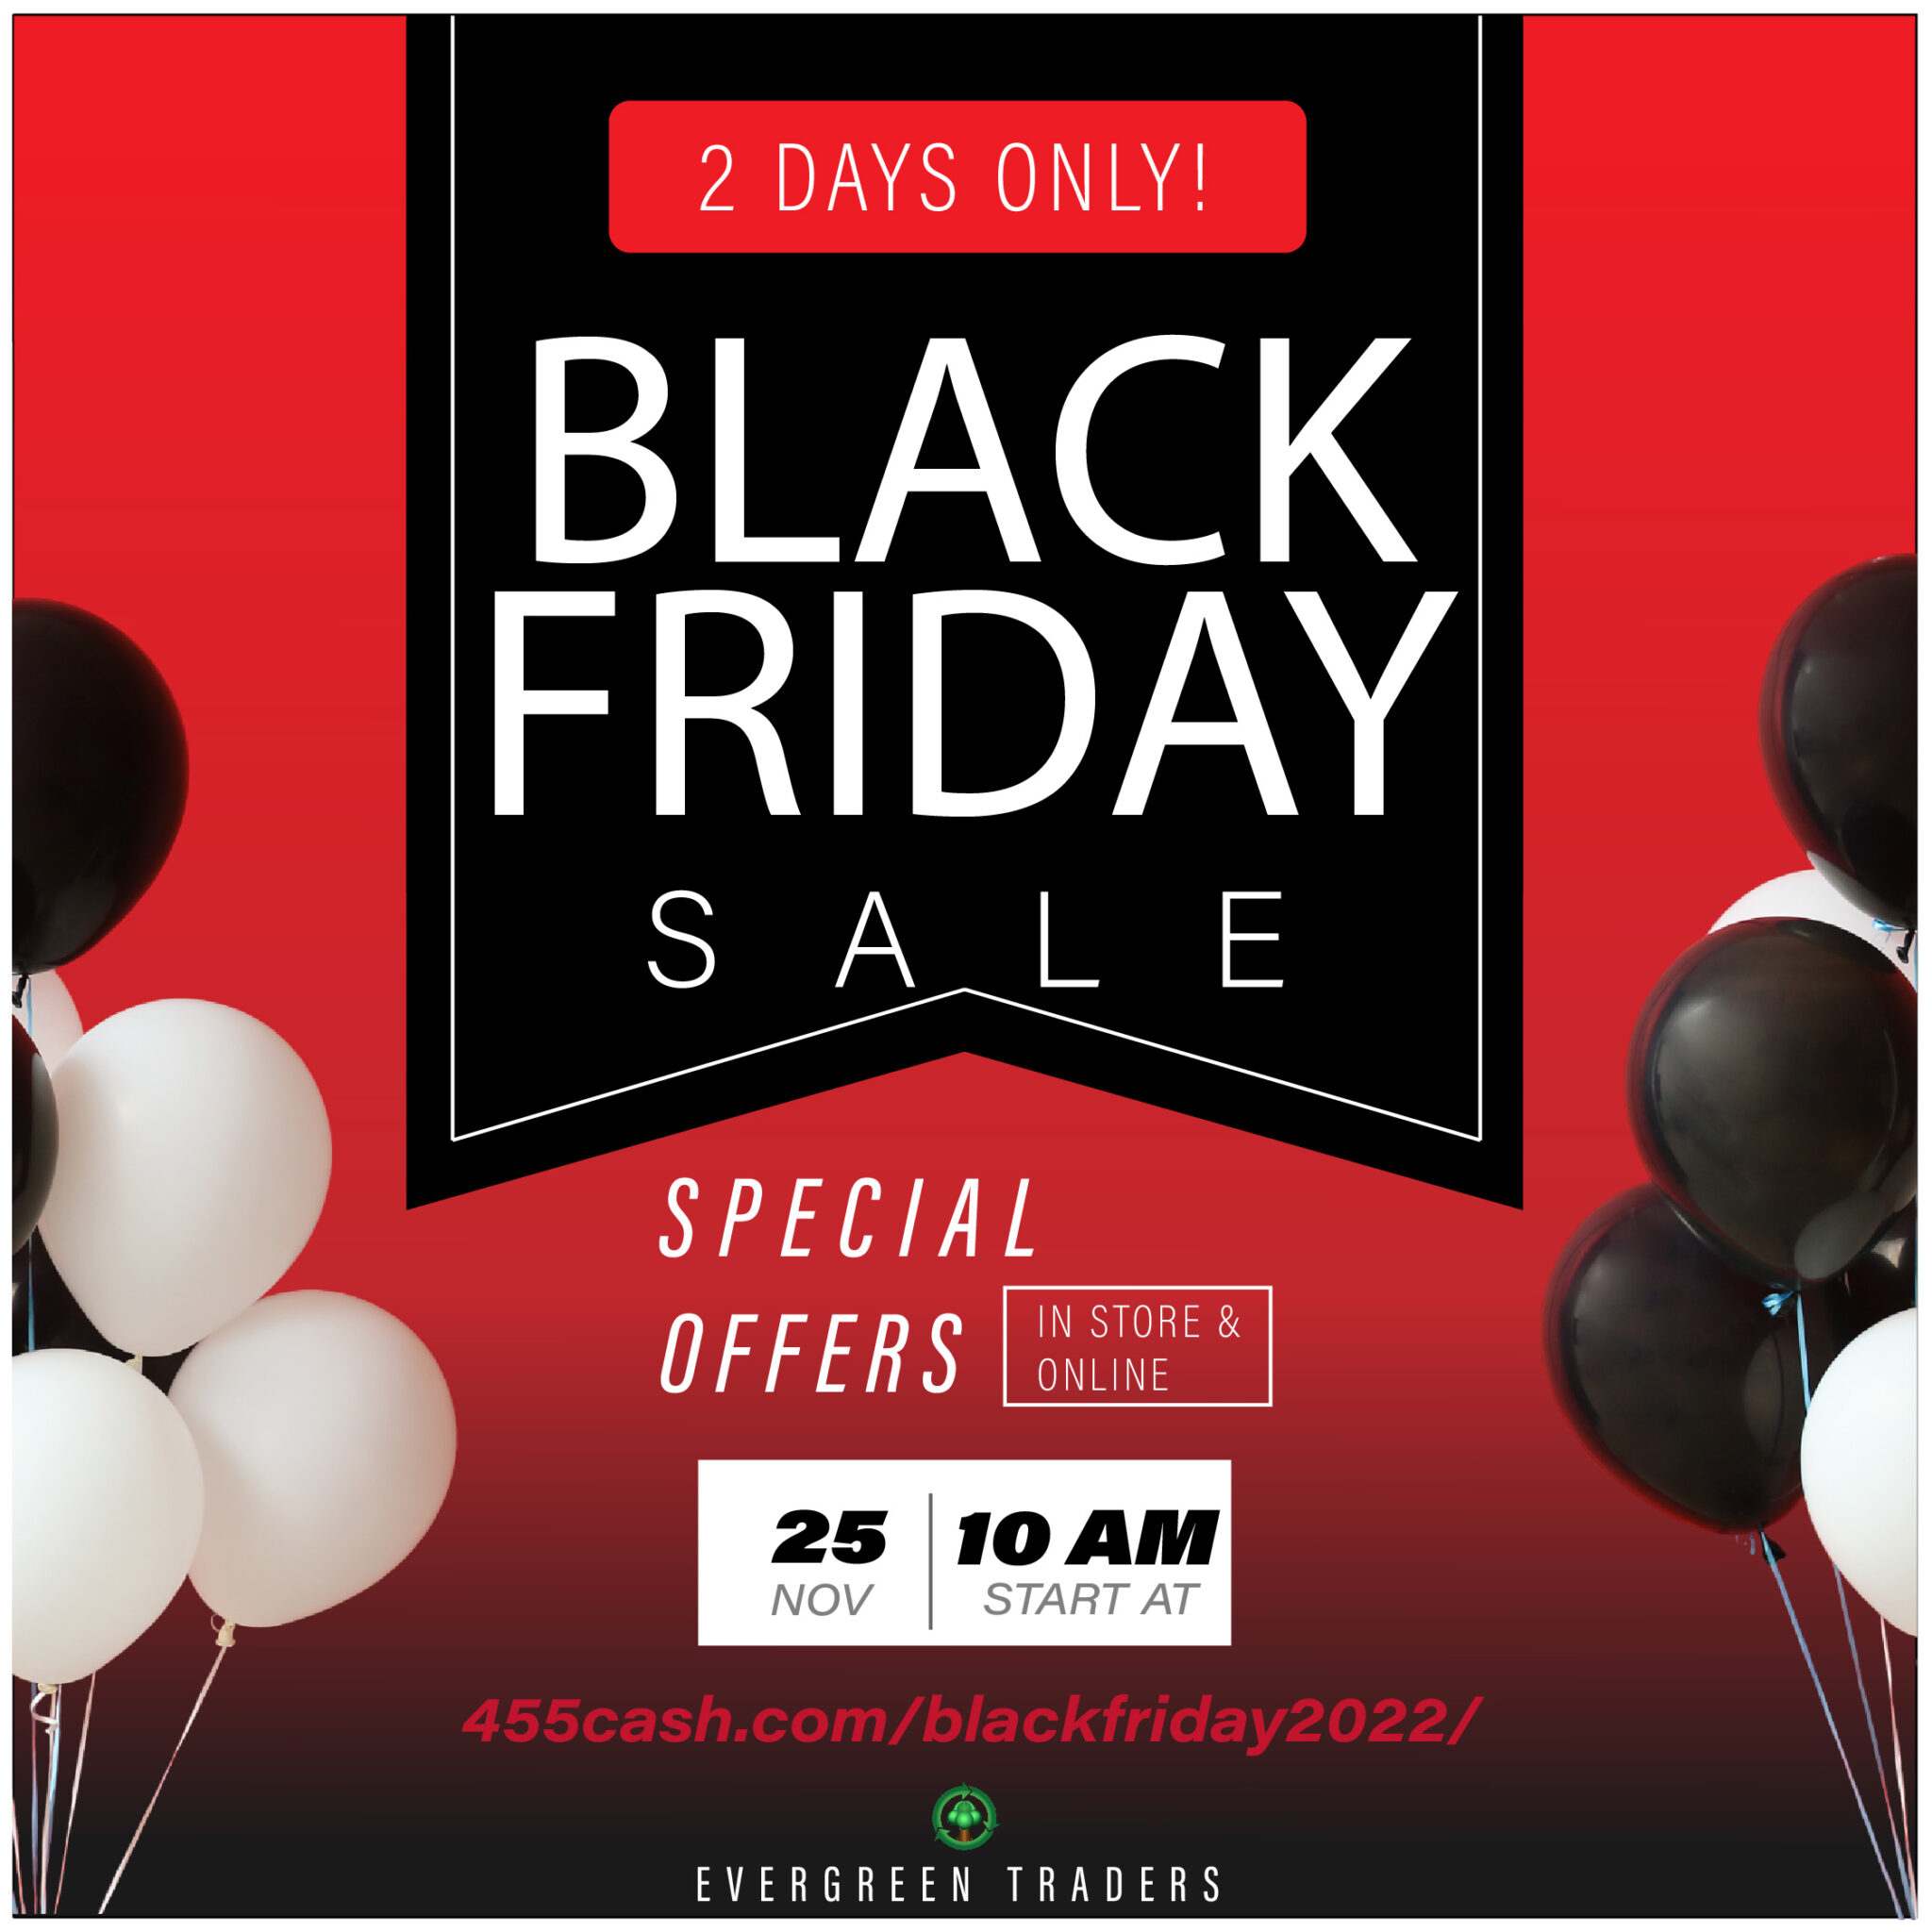 Shop & Save BIG This Black Friday!